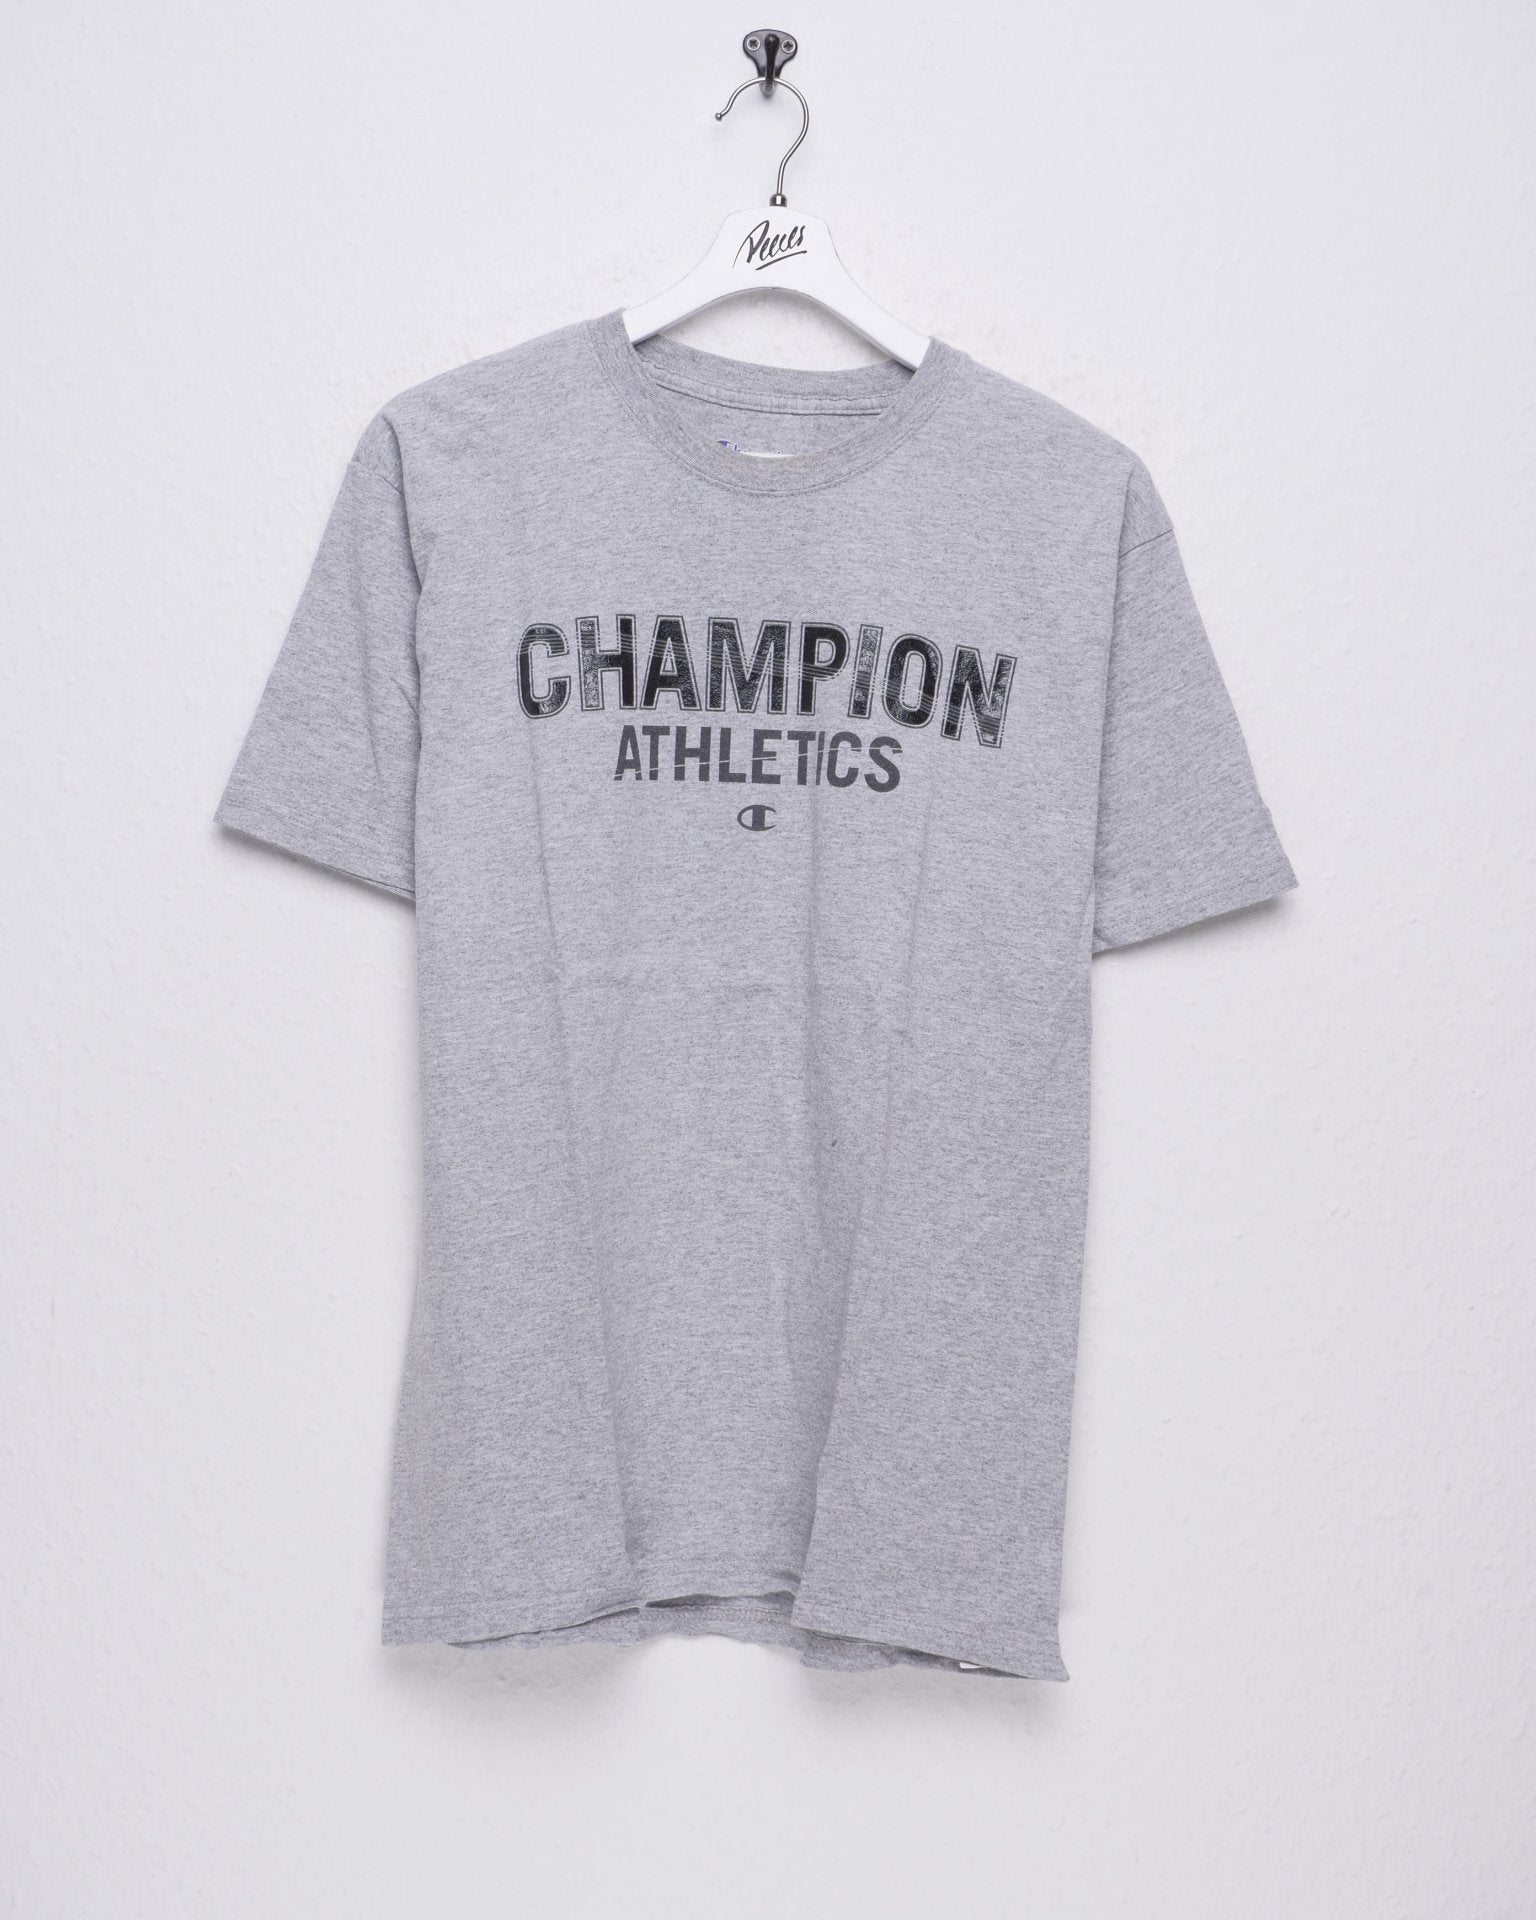 Champion printed Spellout Vintage Shirt - Peeces